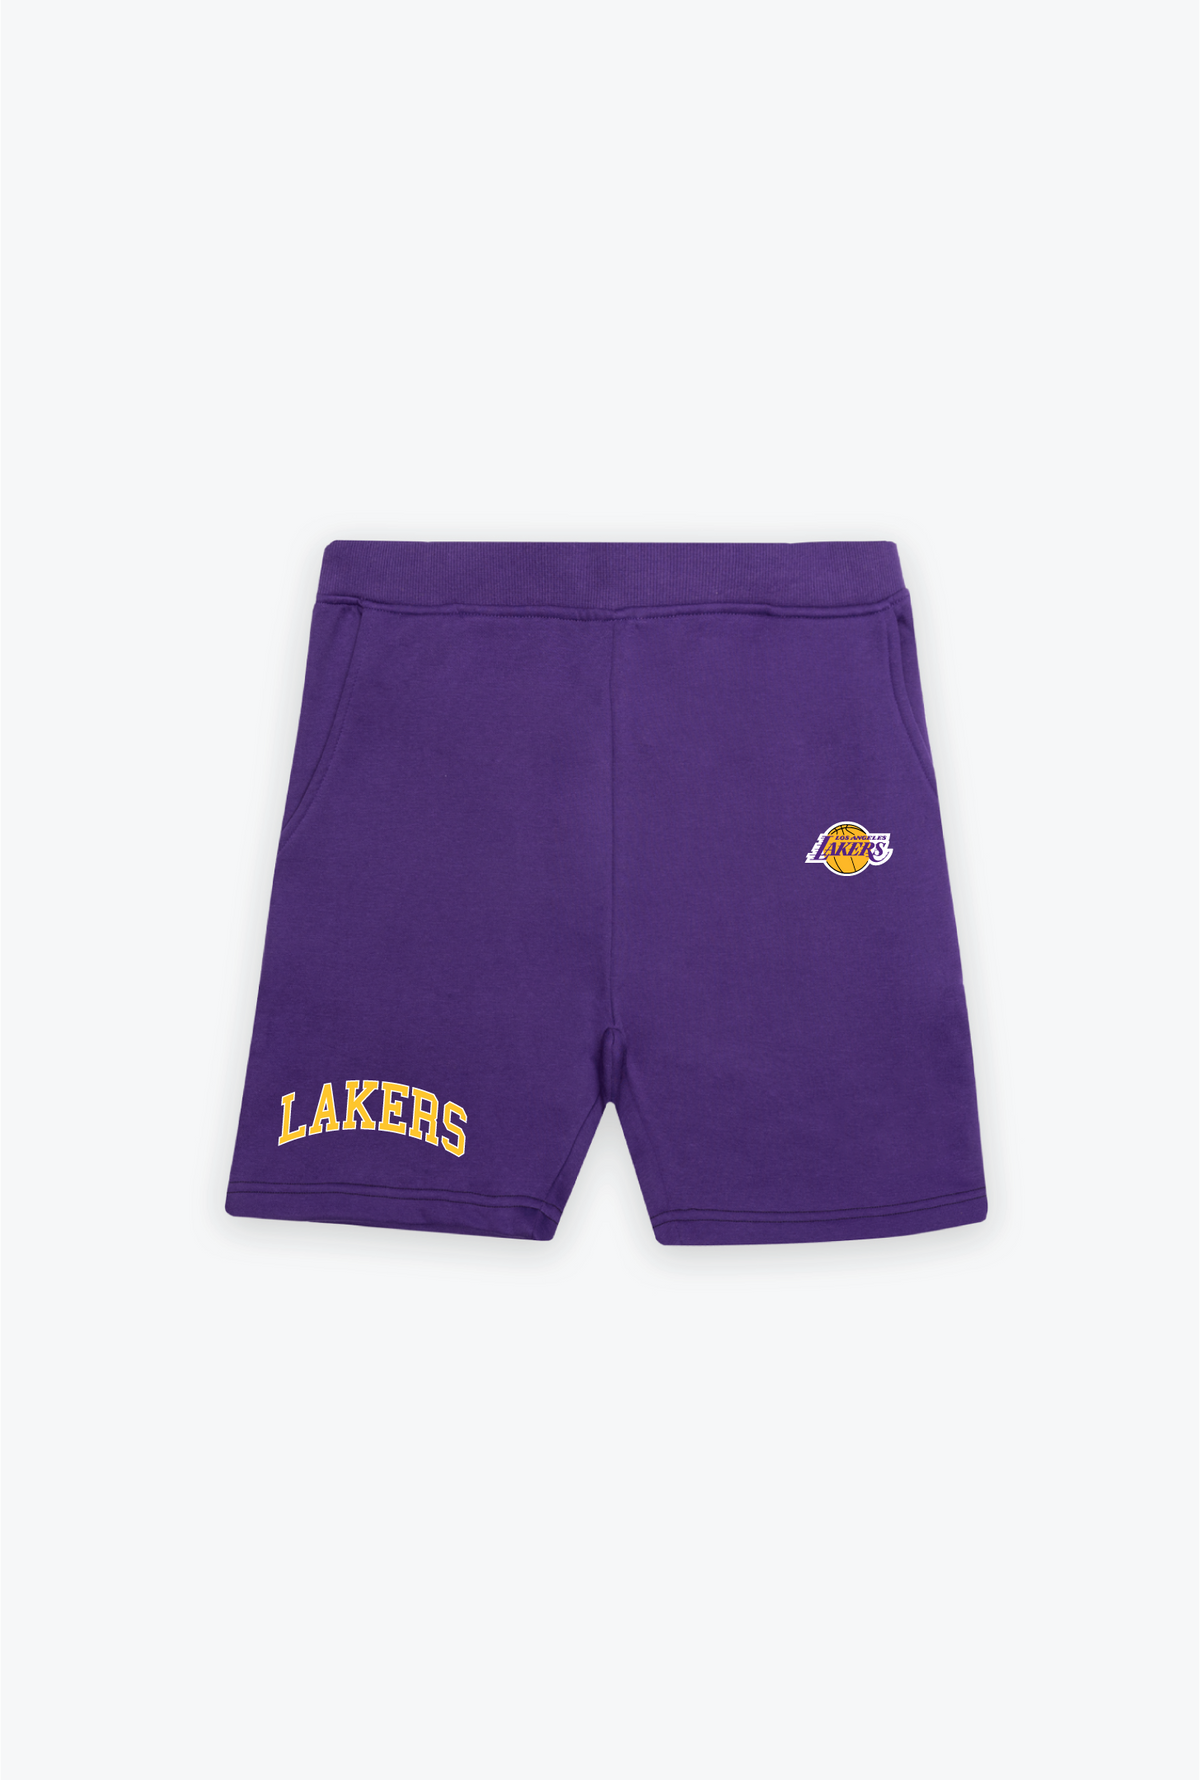 Los Angeles Lakers Playoffs Fleece Shorts - Purple